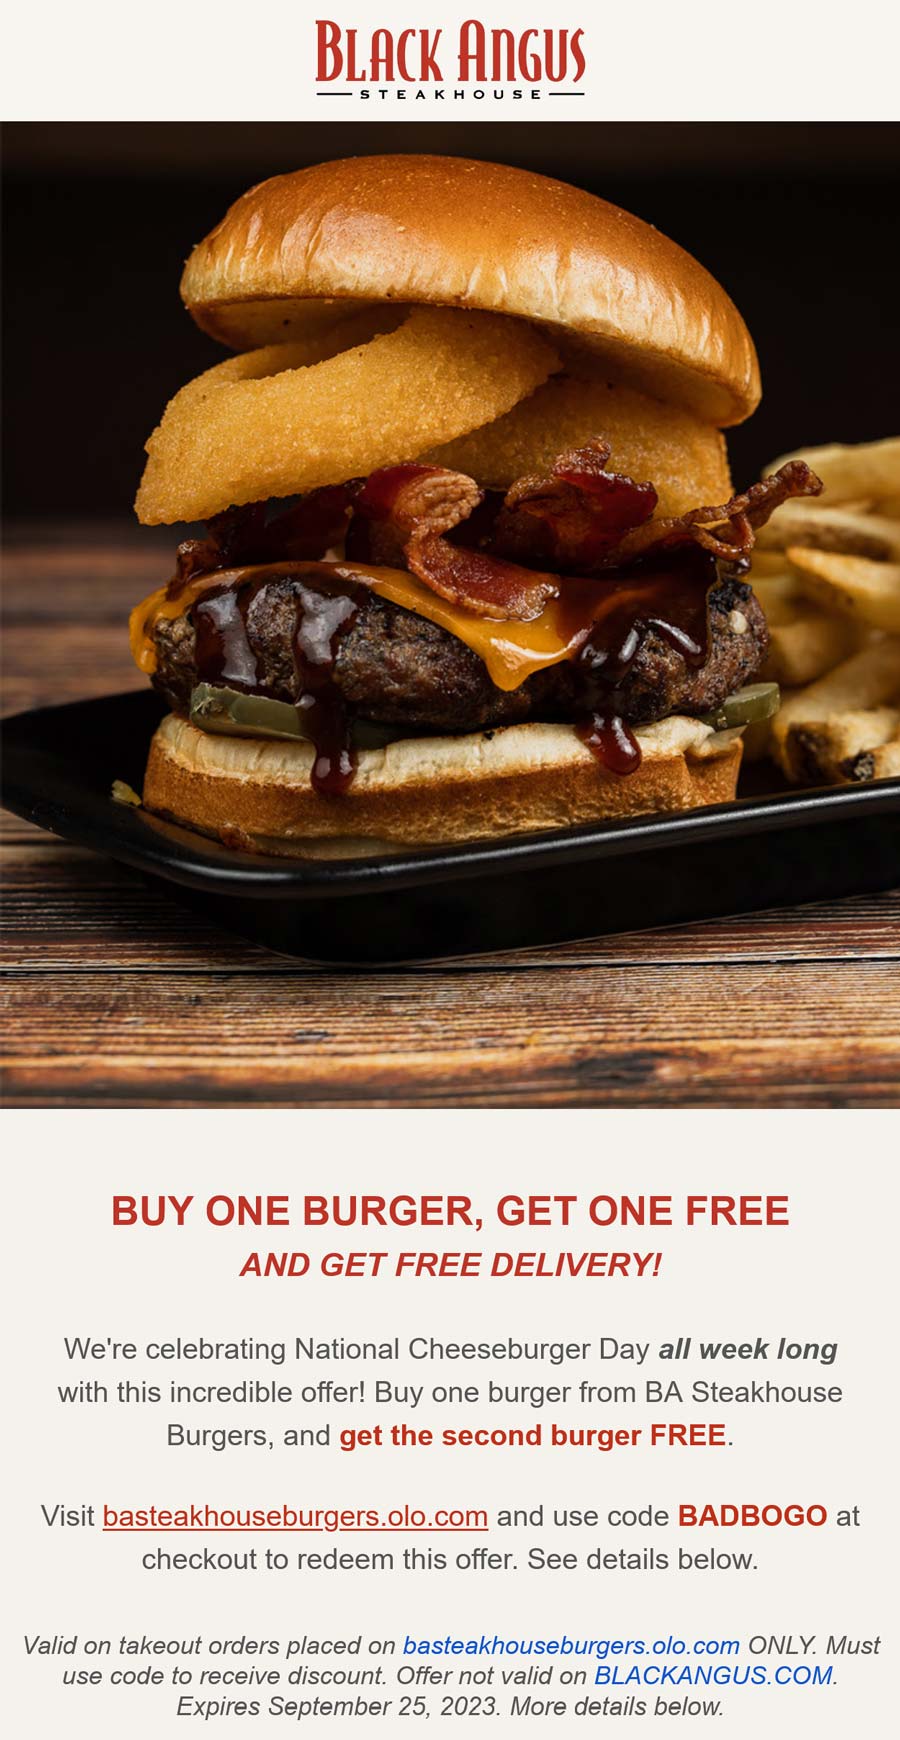 Black Angus restaurants Coupon  Second cheeseburger free all week at Black Angus steakhouse via promo code BADBOGO #blackangus 